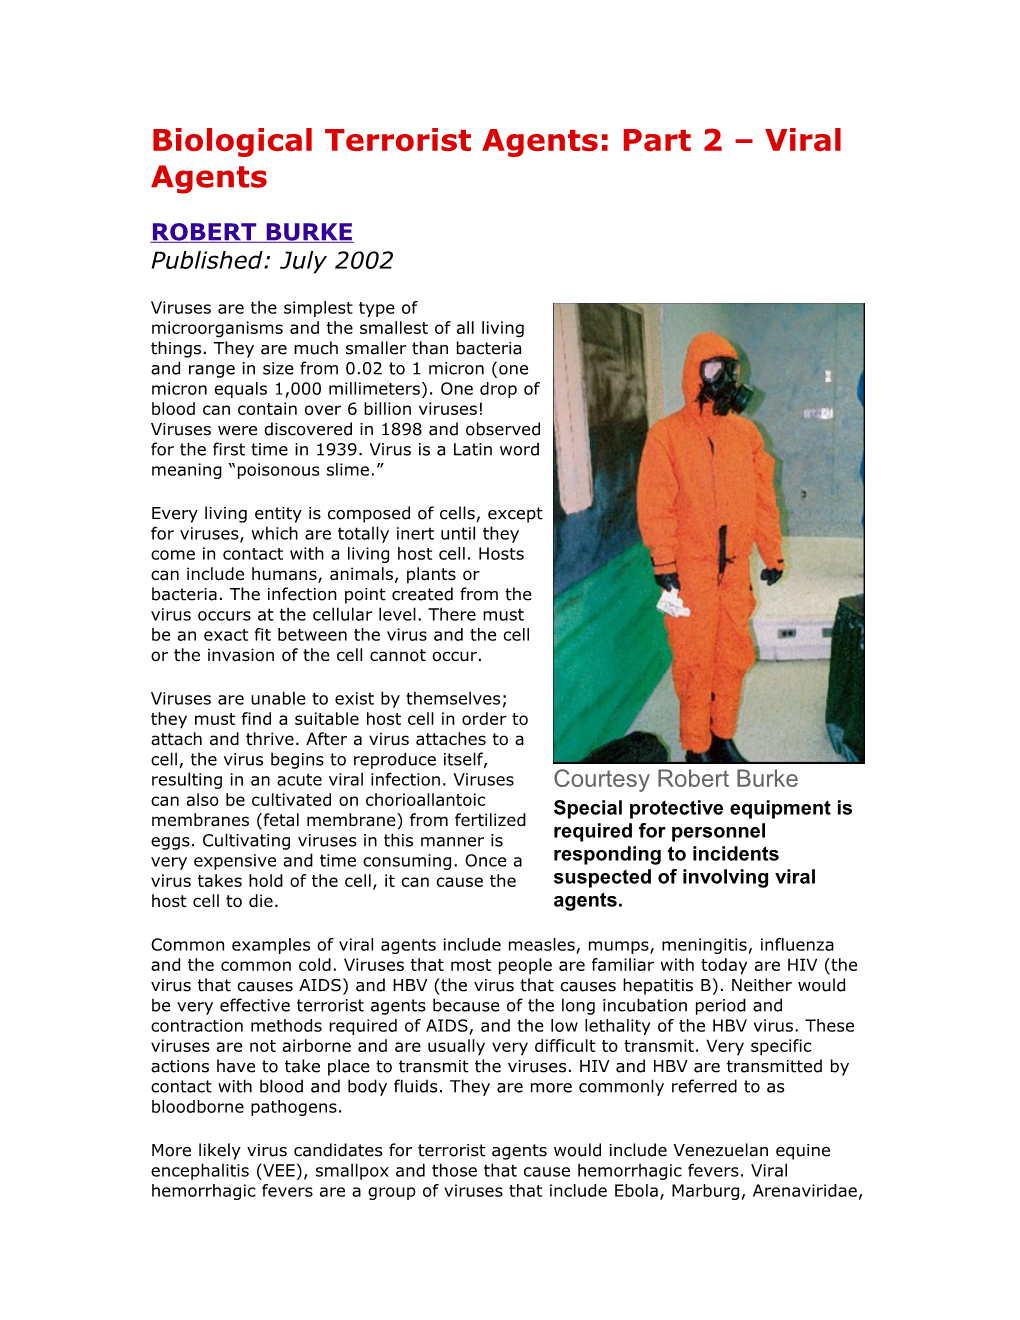 Biological Terrorist Agents: Part 2 Viral Agents